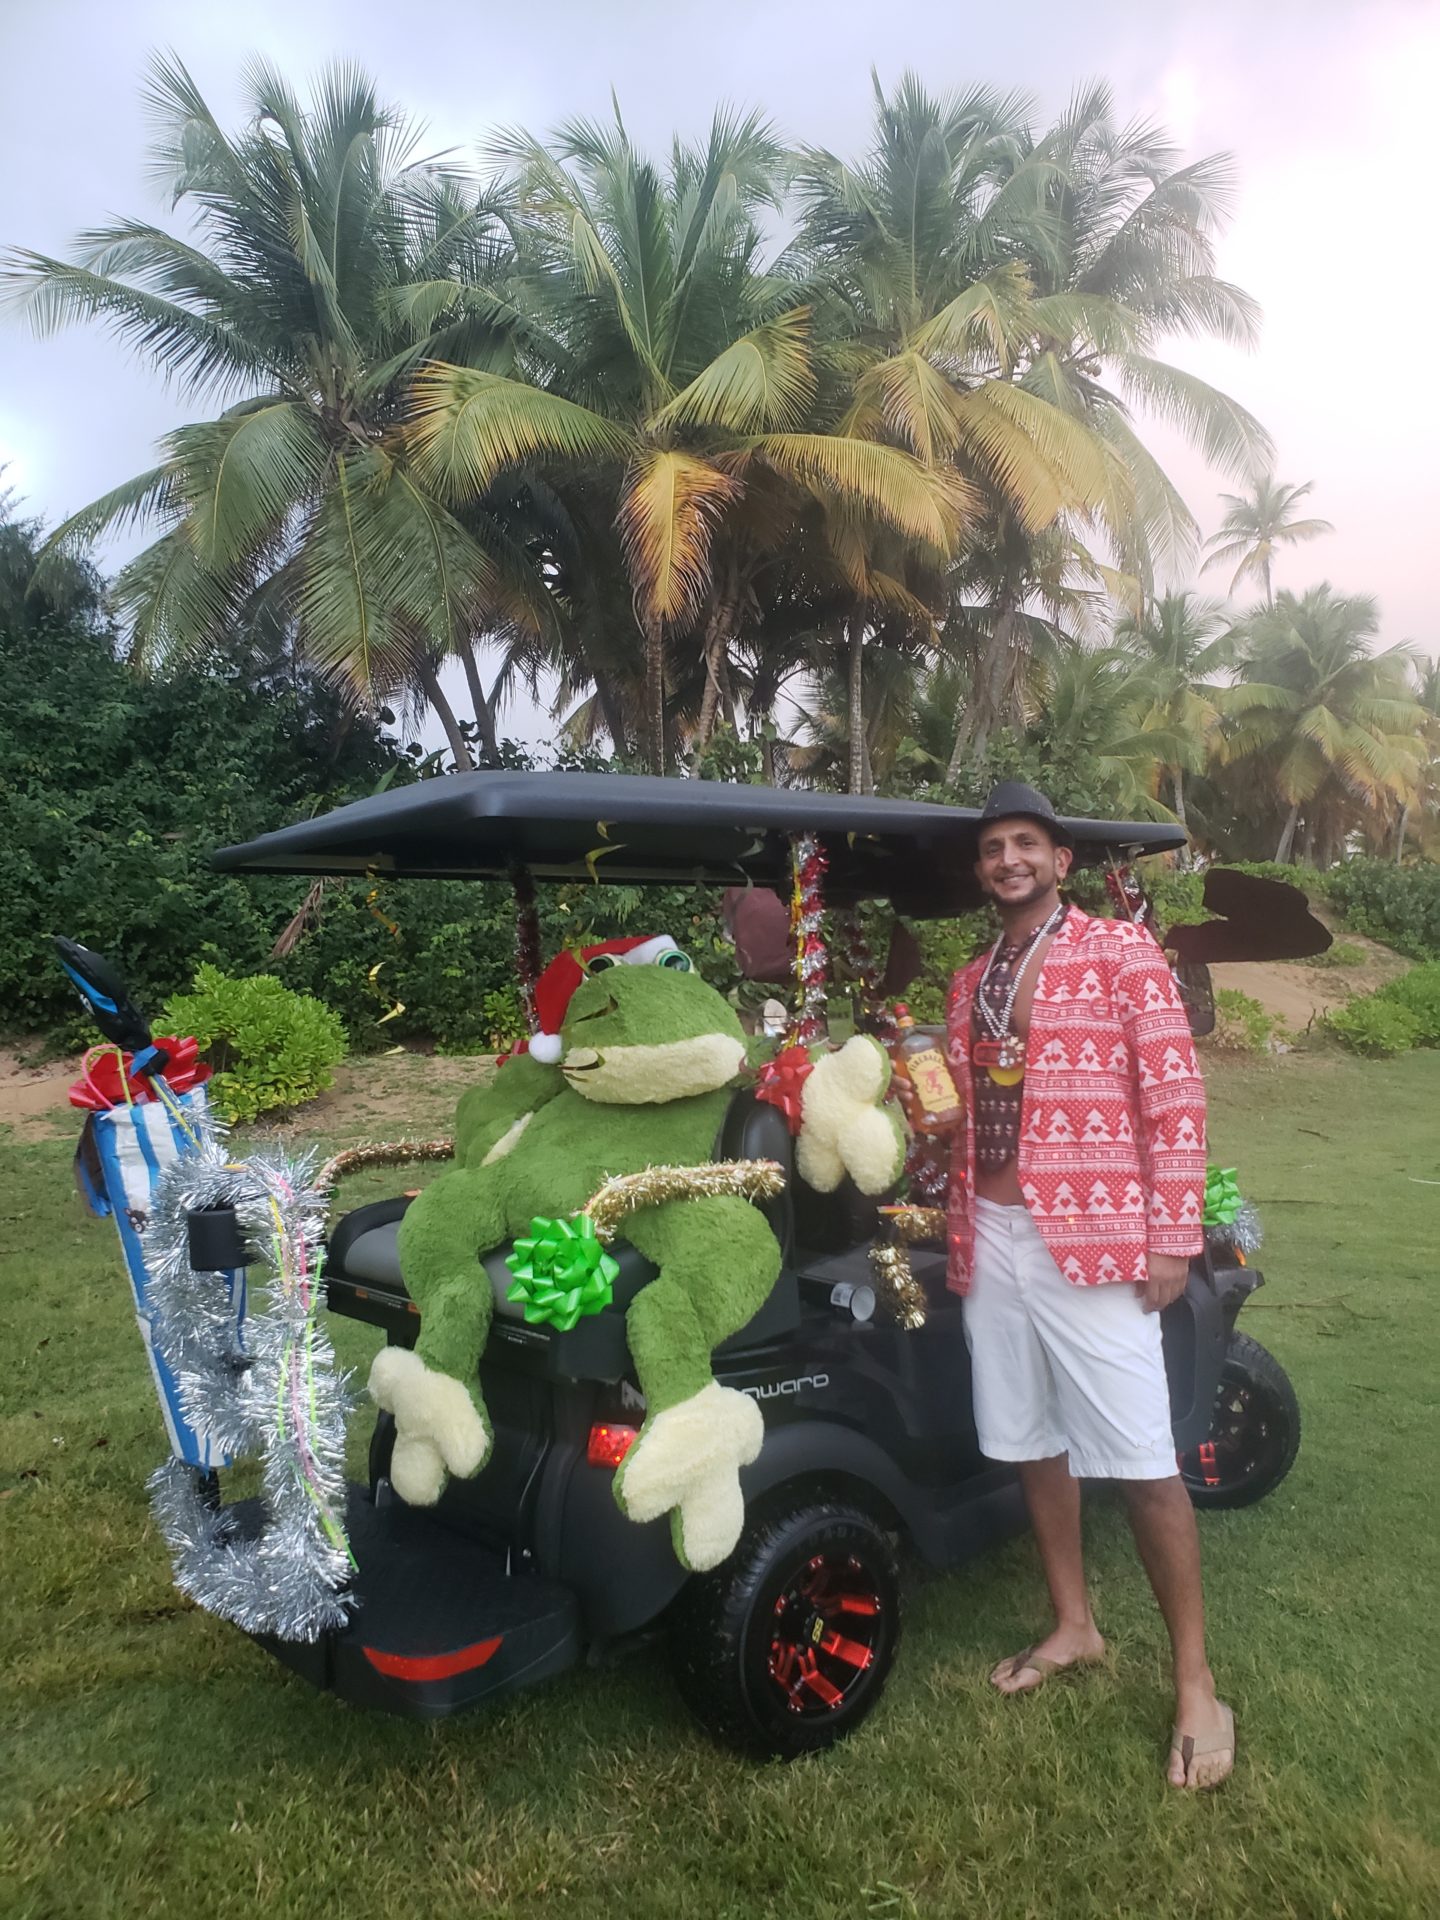 a man standing next to a golf cart with a stuffed animal